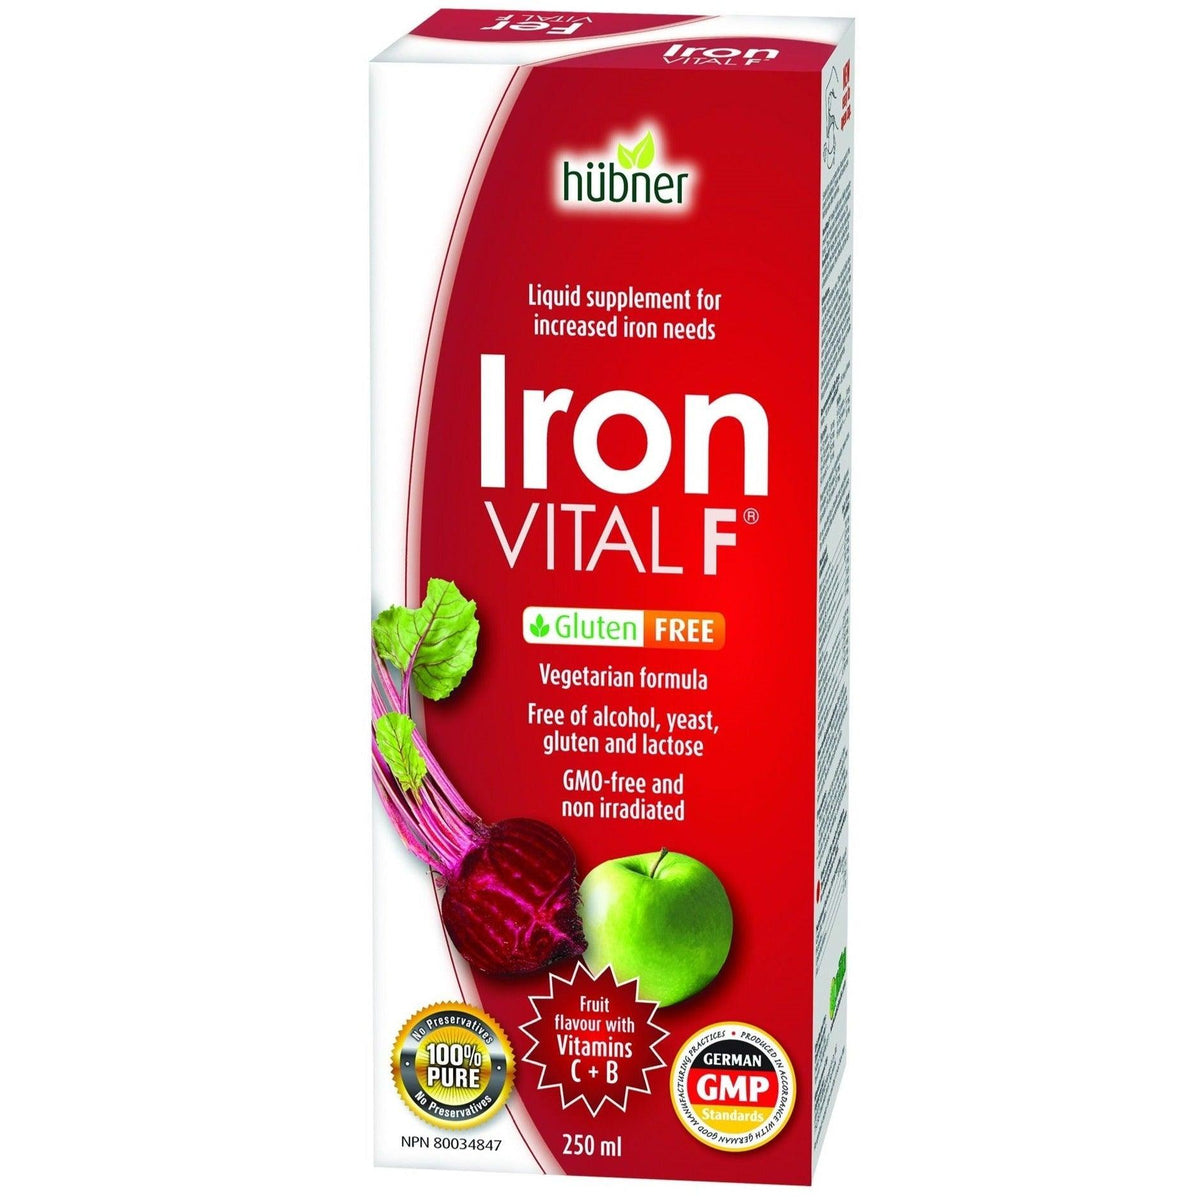 Hubner Iron Vital F 250mL*Product Expiry Aug'2024* Minerals - Iron at Village Vitamin Store